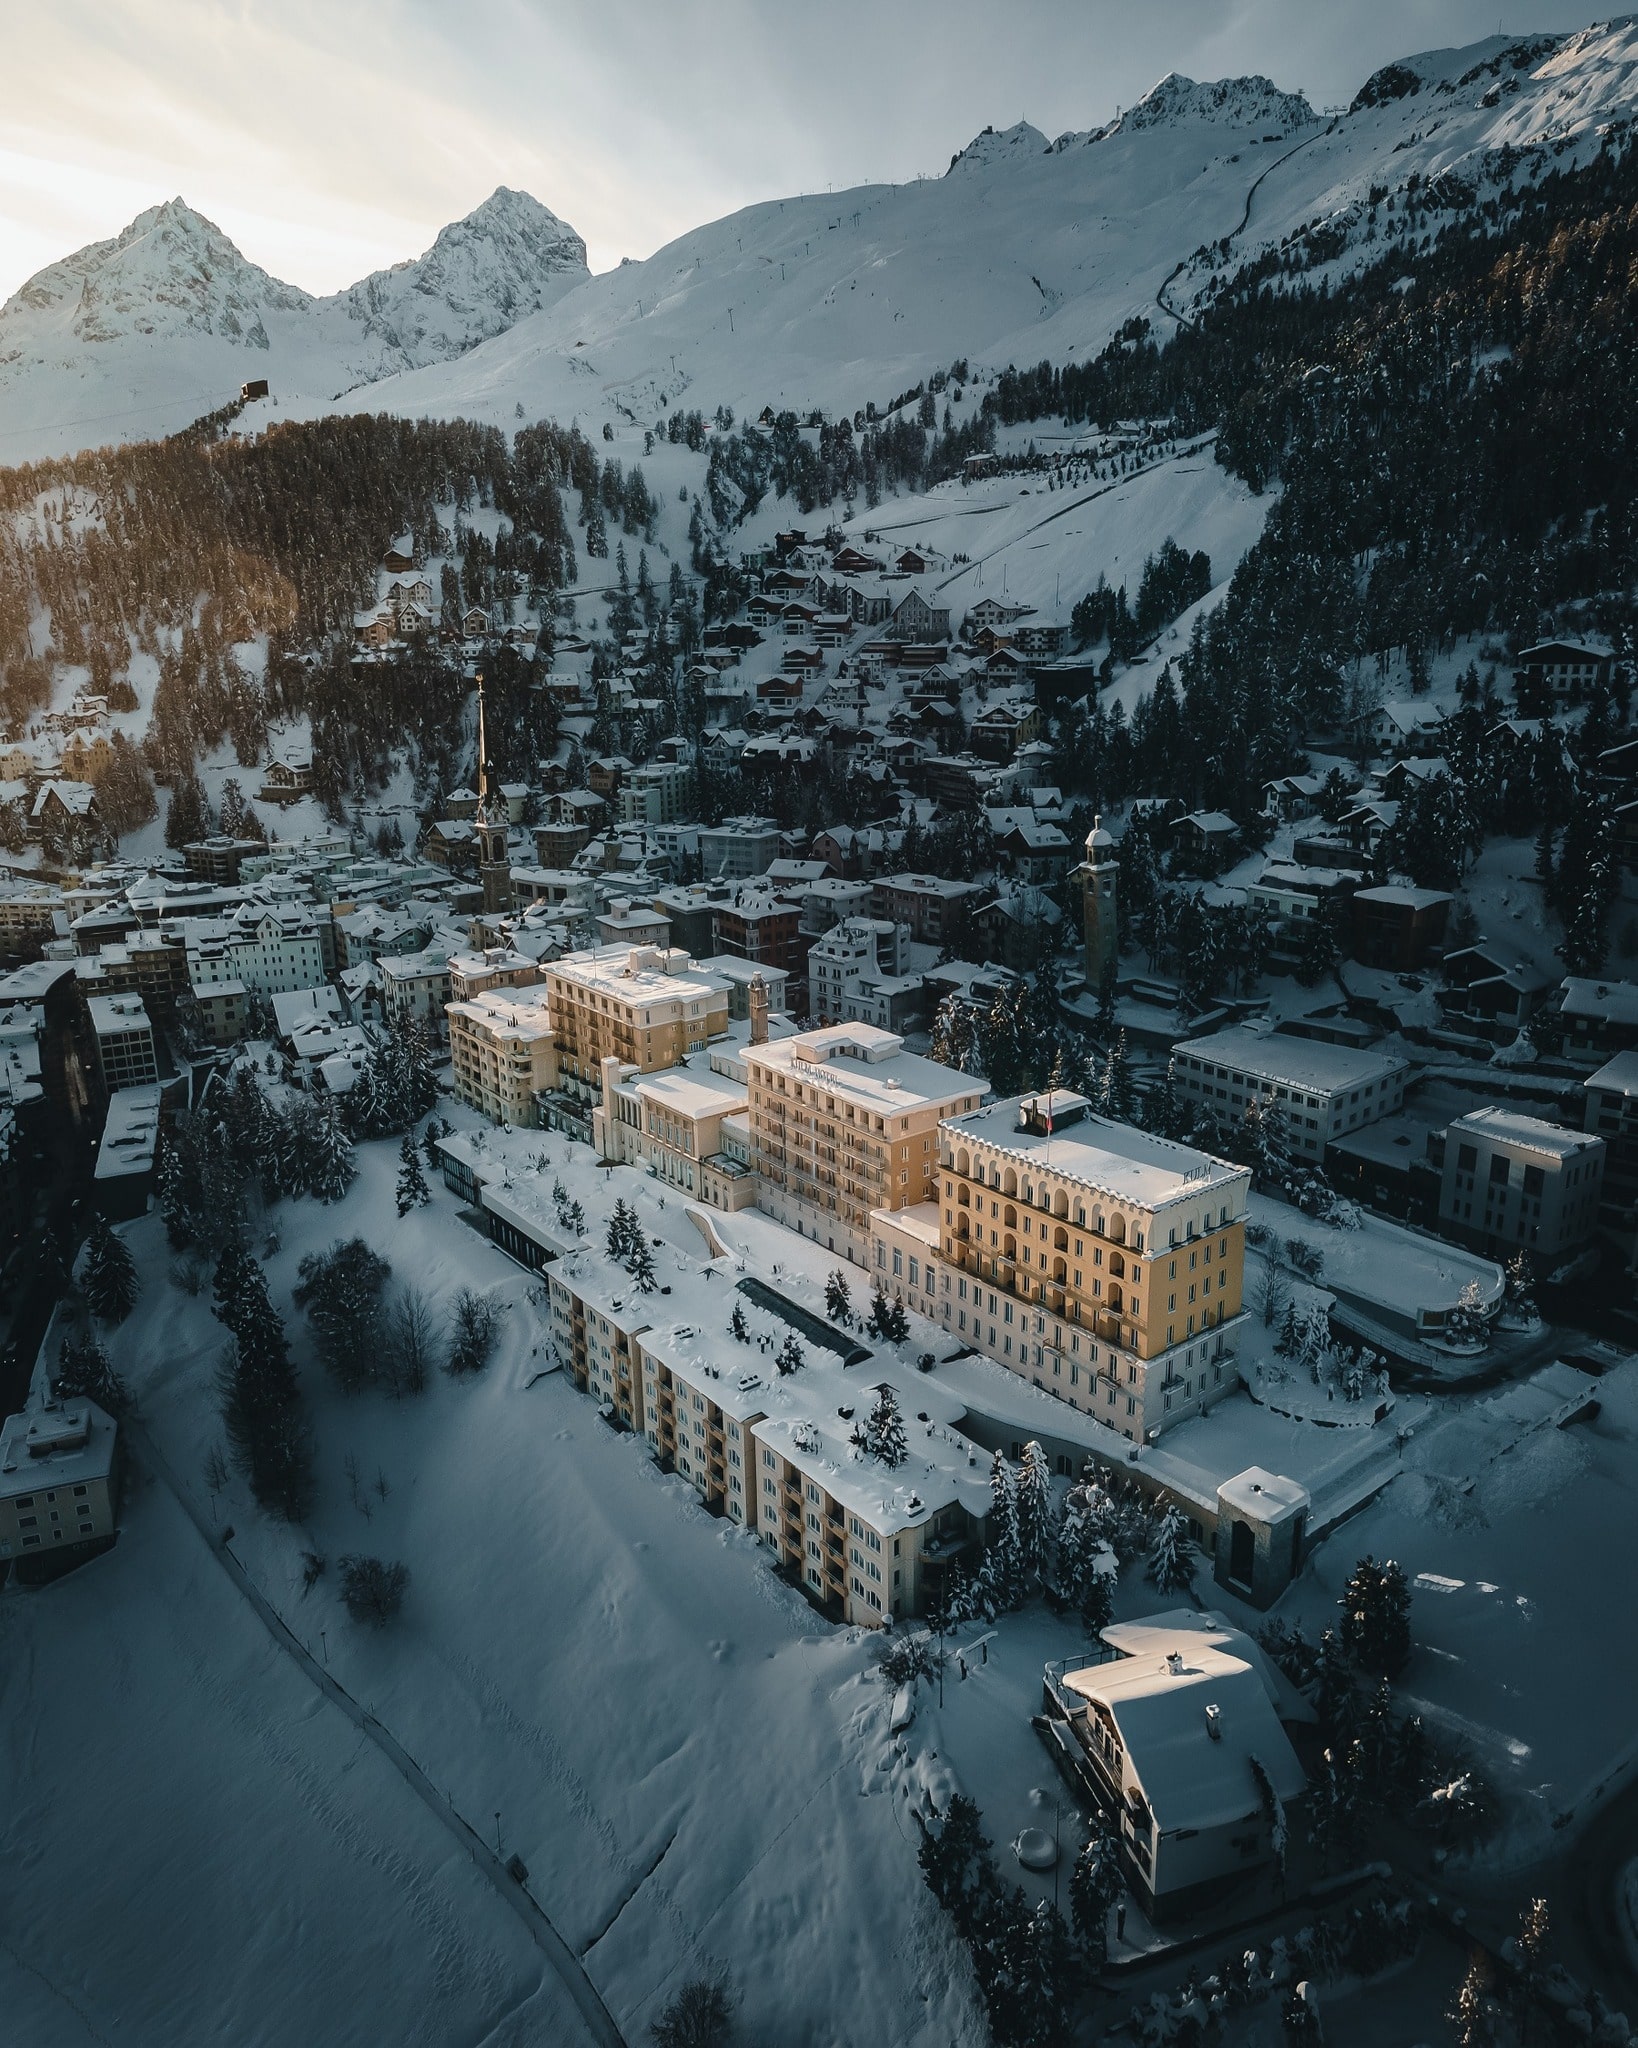 Kulm St. Moritz